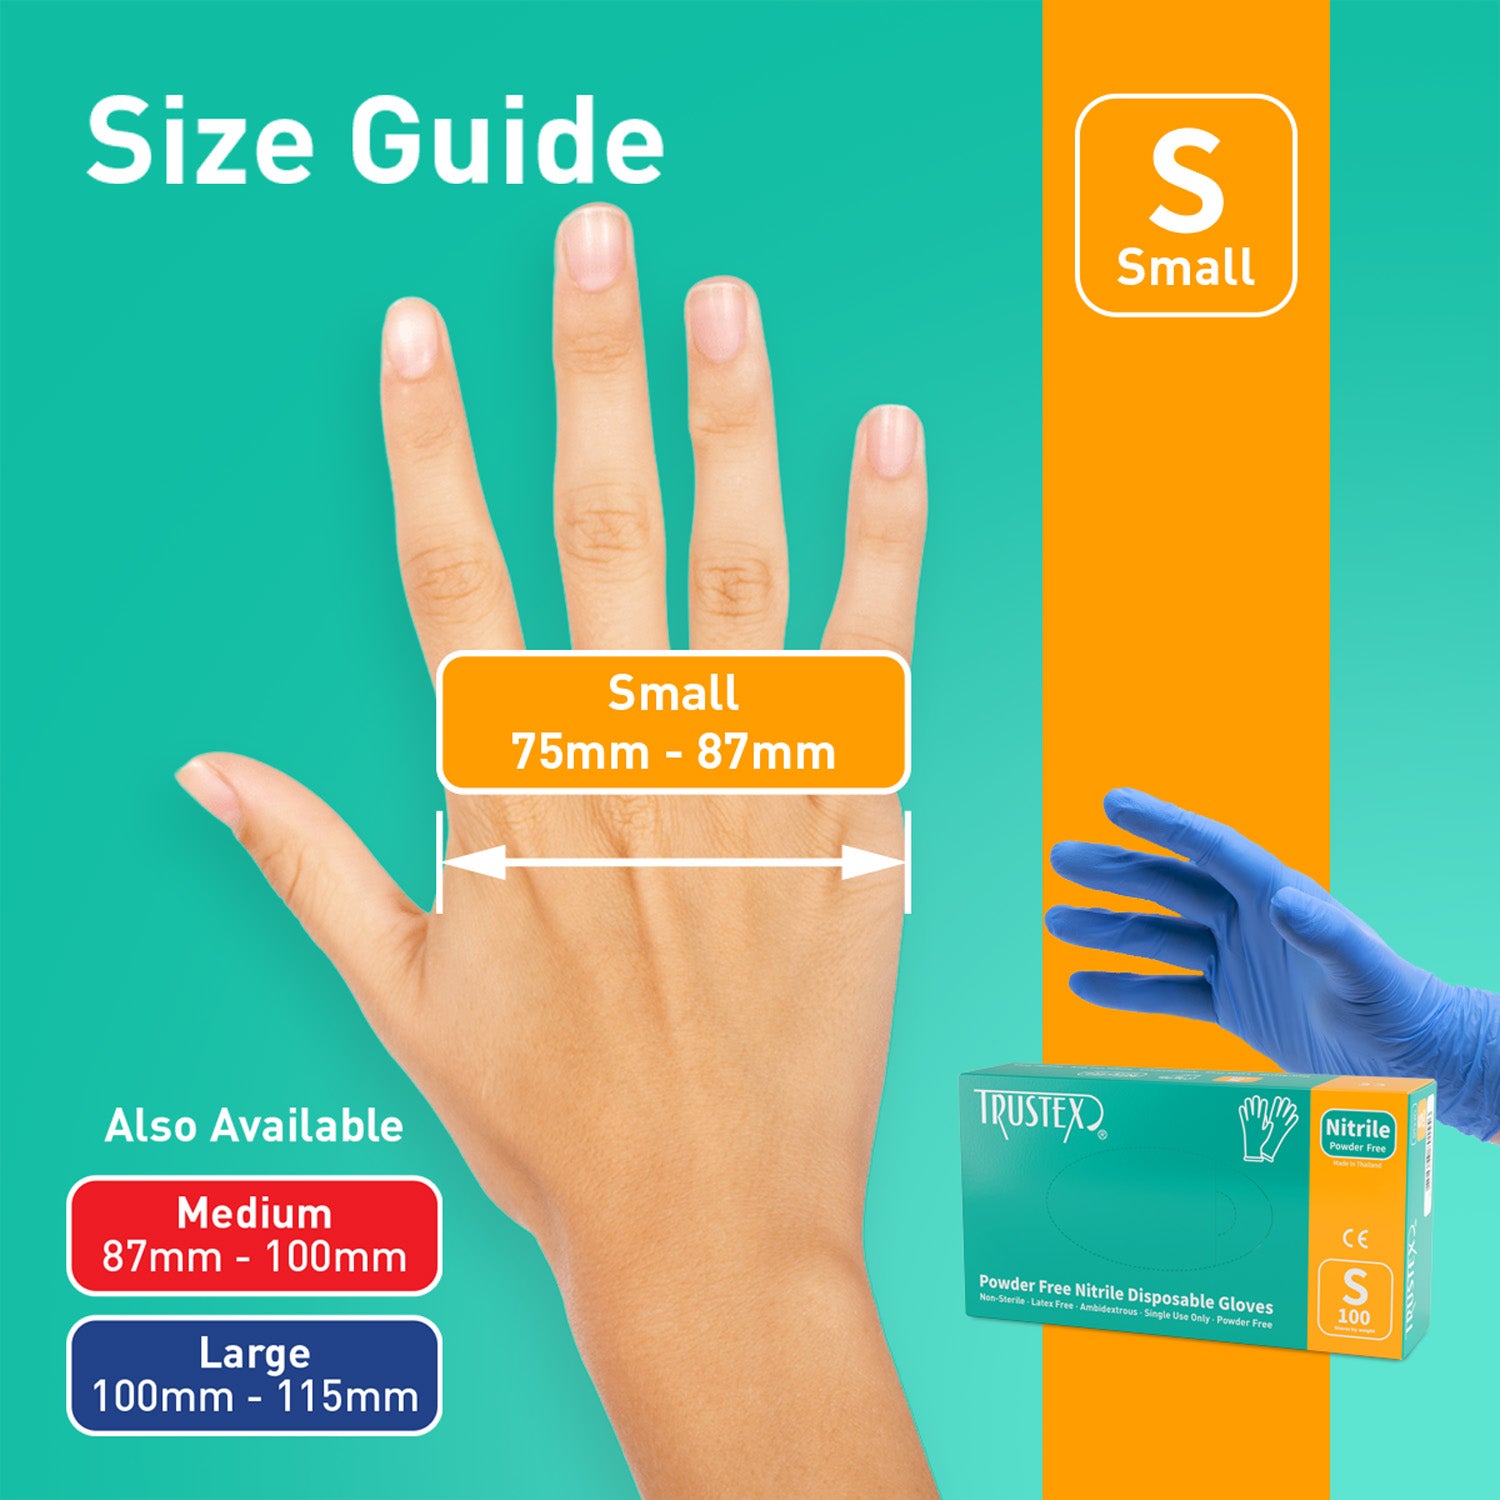 Trustex General Purpose Gloves Small, Latex-Free & Powder-Free, Box of 100